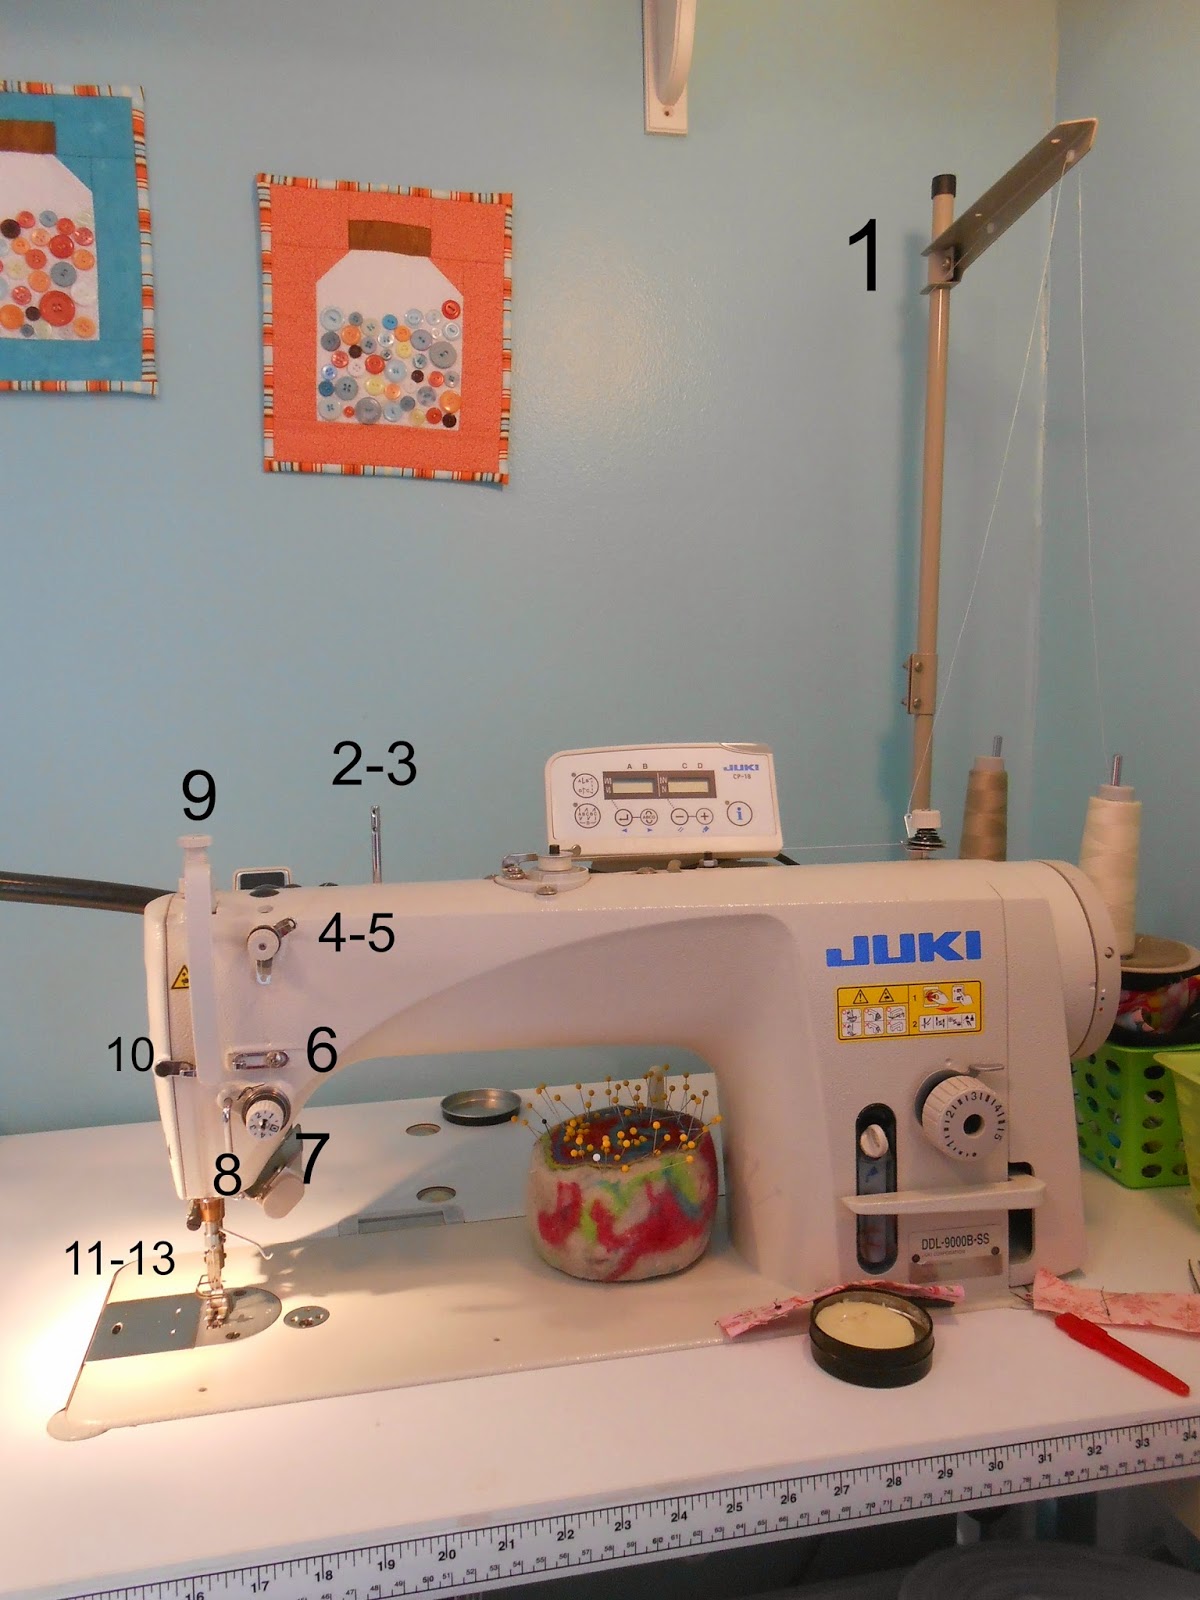 Juki Industrial Sewing Machine DDL-9000SS Review - Vivat Veritas